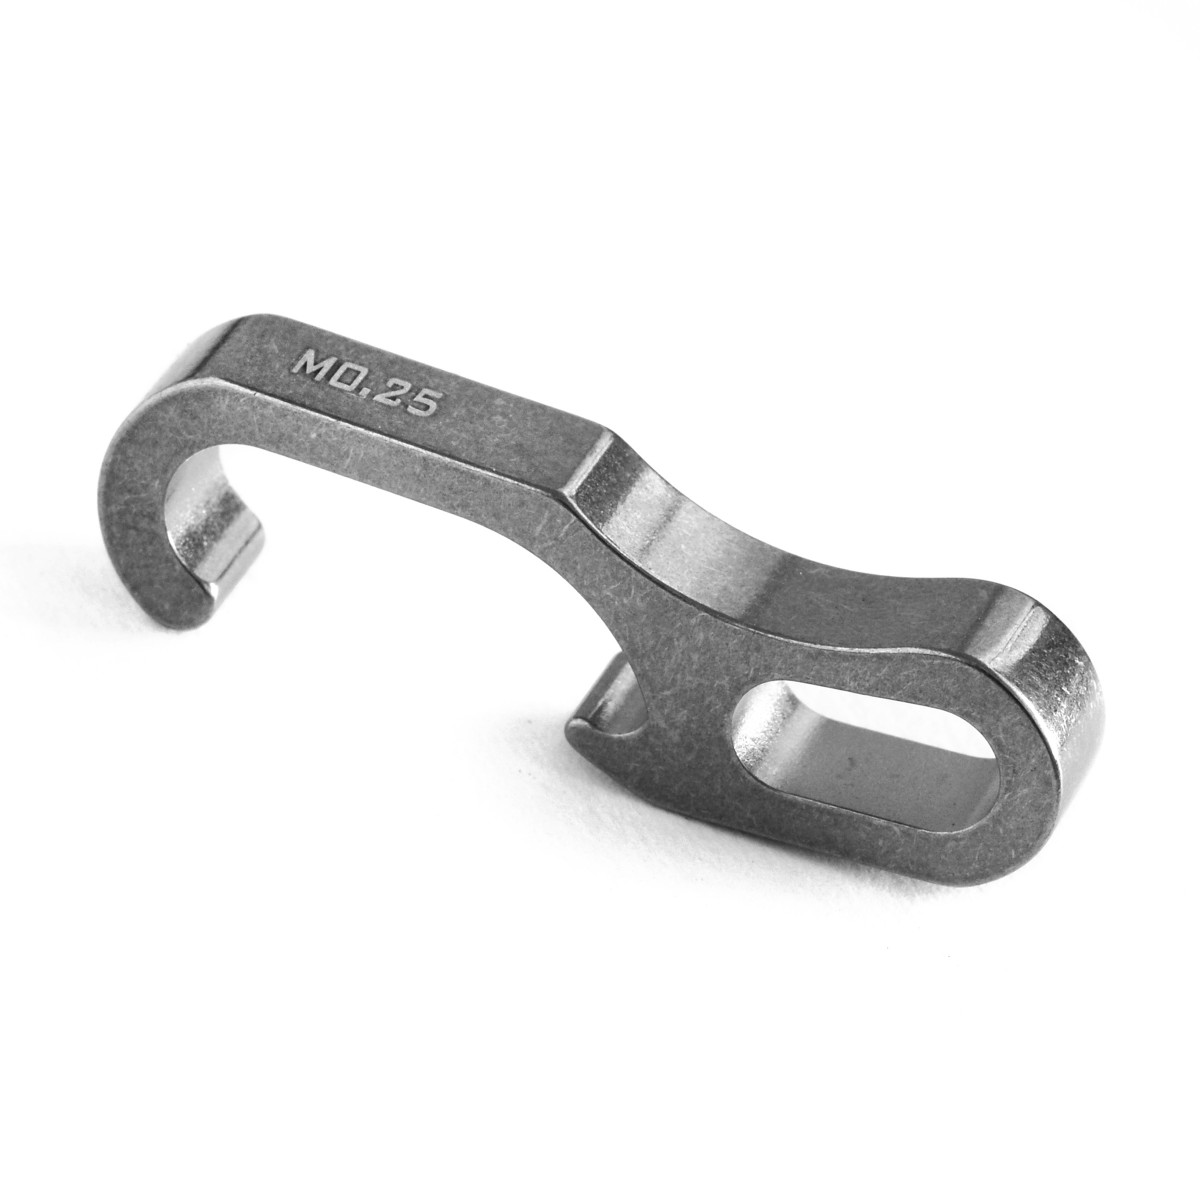 1 Pcs Titanium alloy mini bottle opener can opener stainless steel key cxy 